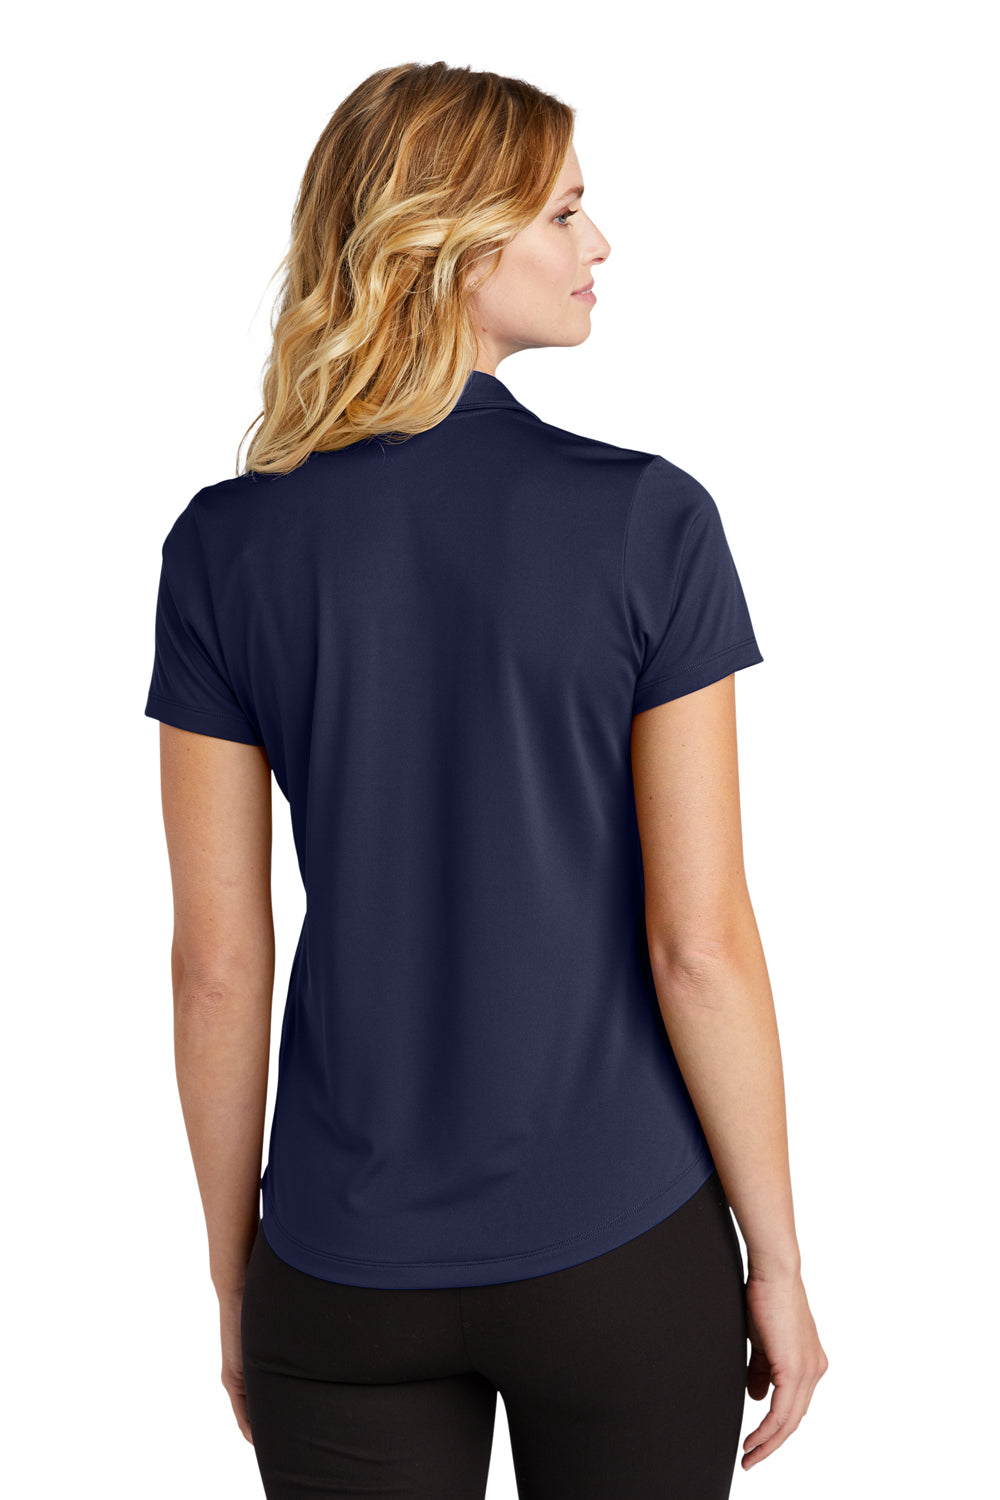 Port Authority LK864 C-Free Performance Short Sleeve Polo Shirt True Navy Blue Back